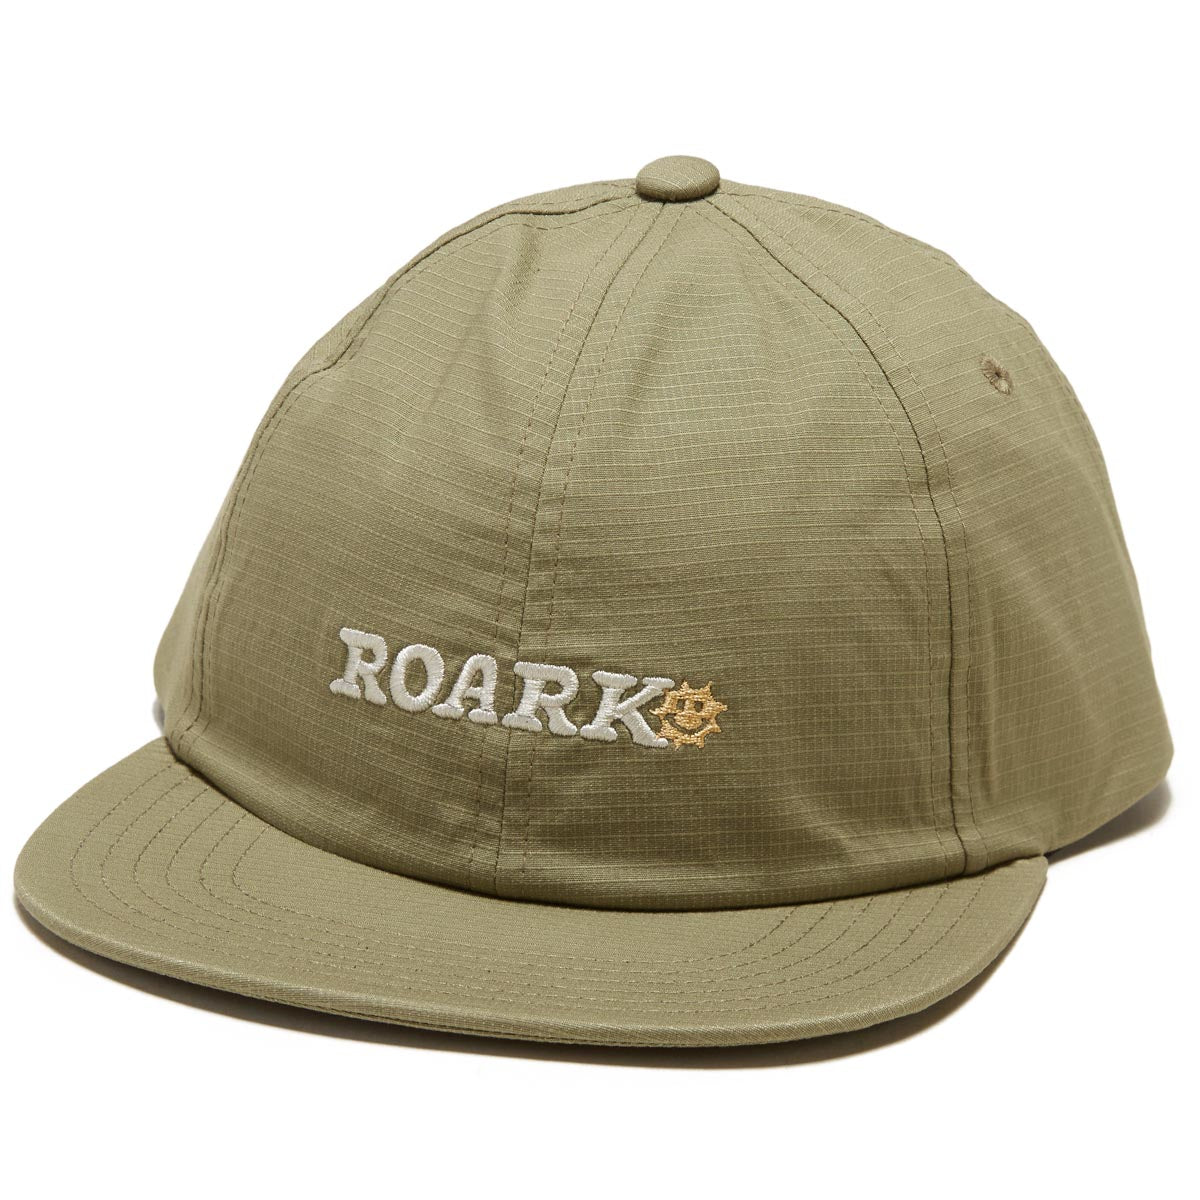 Roark Campover Strapback Hat - Dusty Green image 1